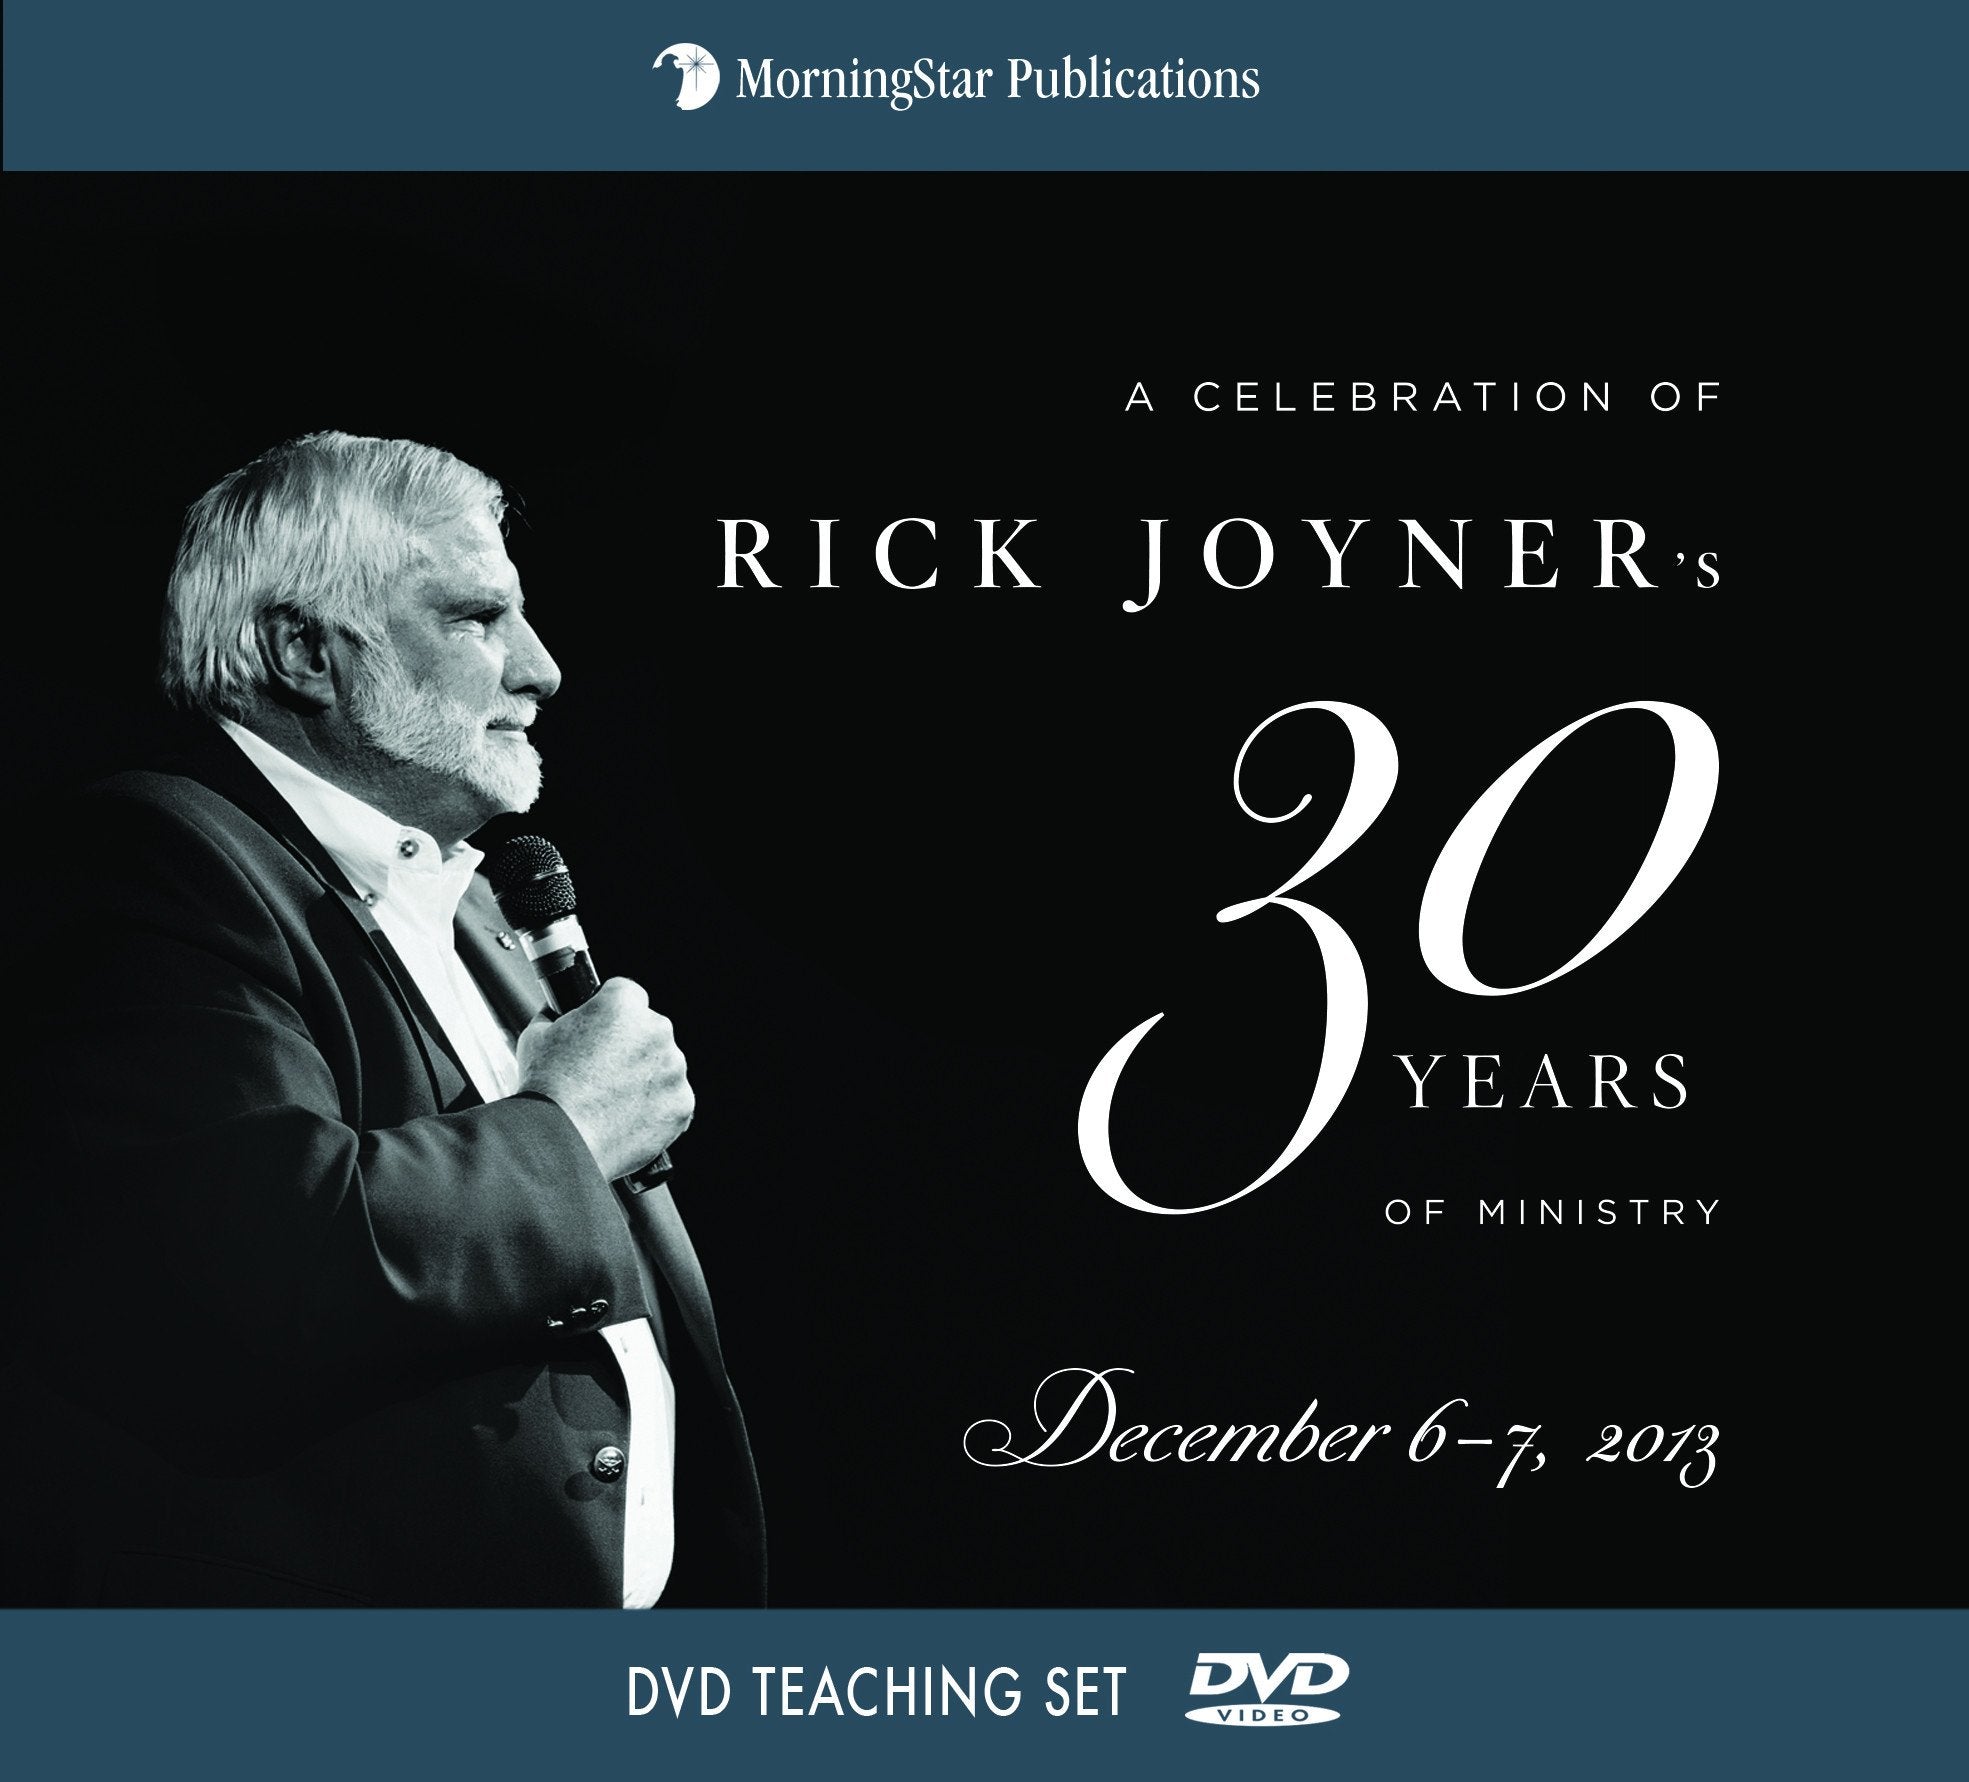 A Celebration of Rick Joyner's 30 Years of Ministry